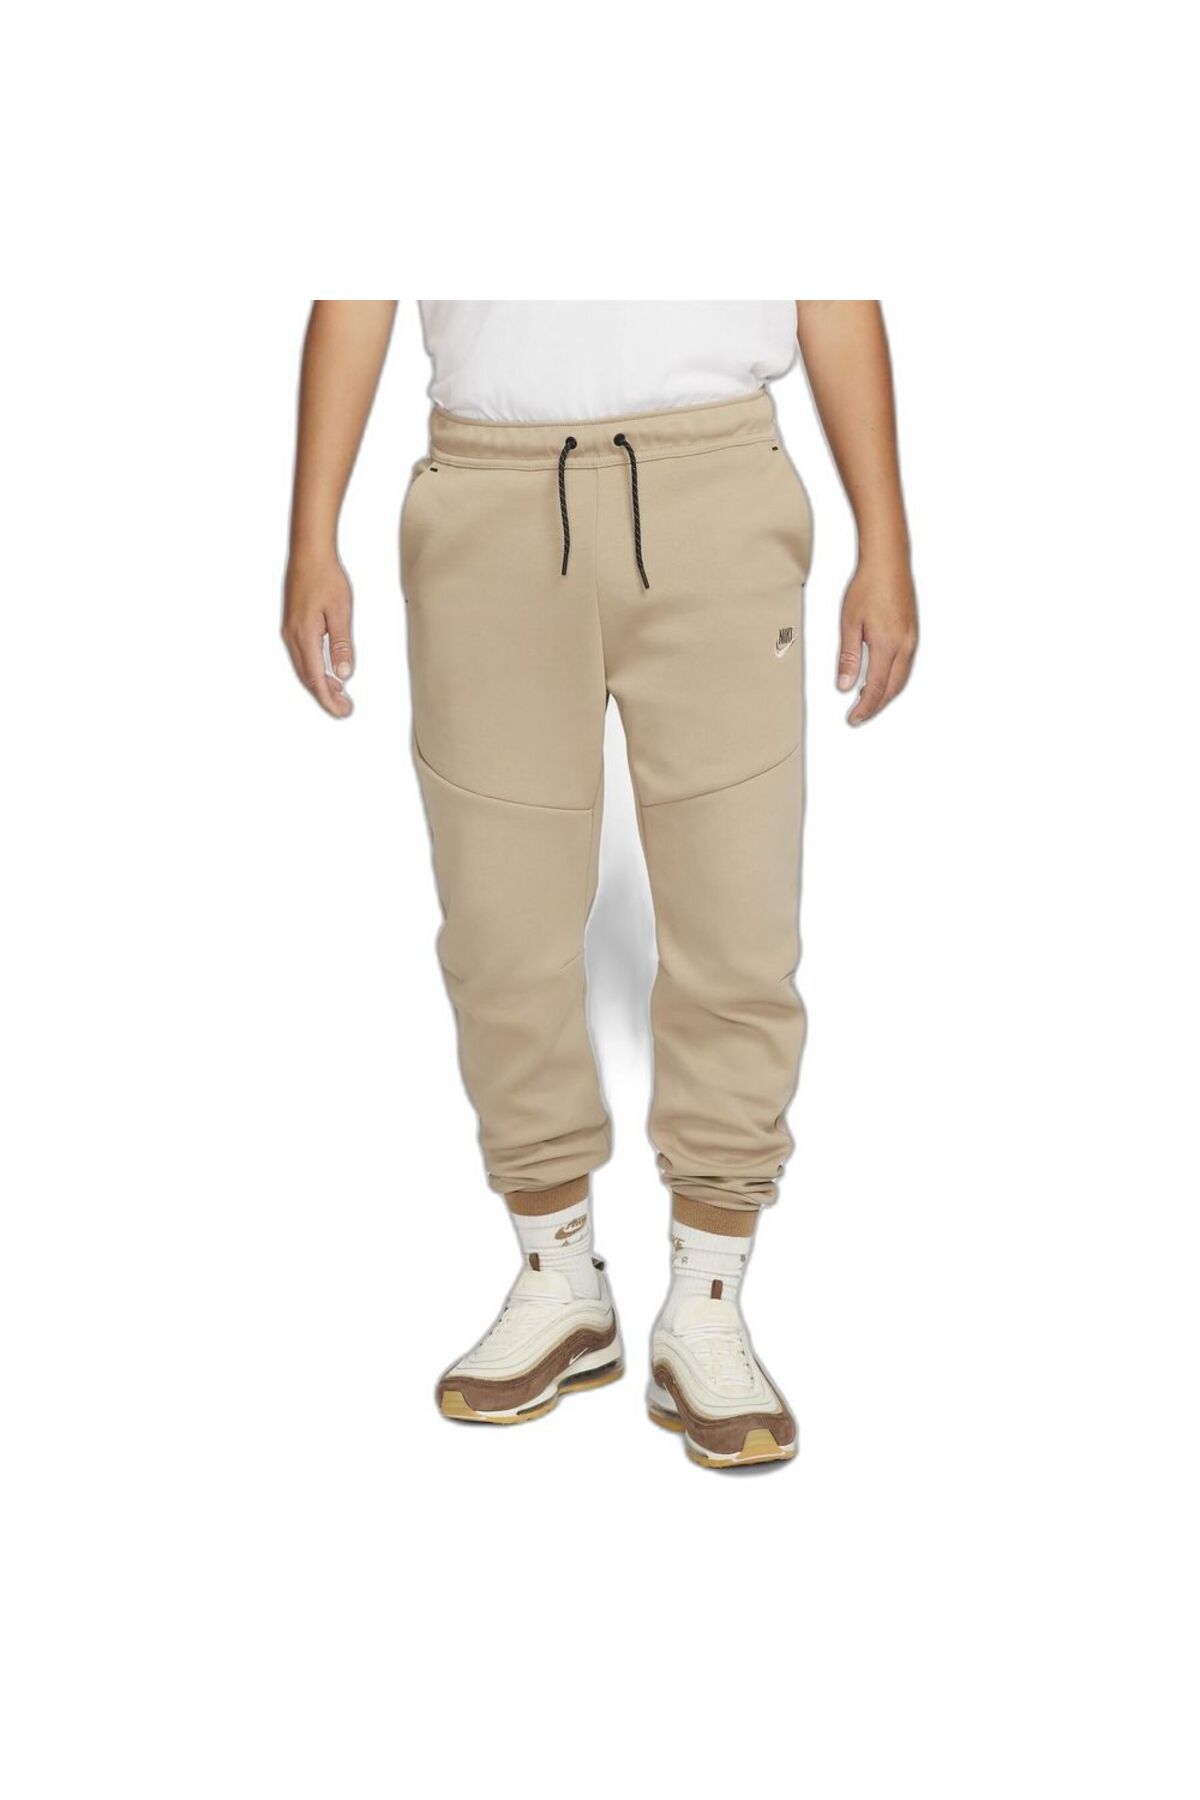 Nike Sportswear Tech Fleece Graphic Joggers Erkek Eşofman Altı Dx0581-247